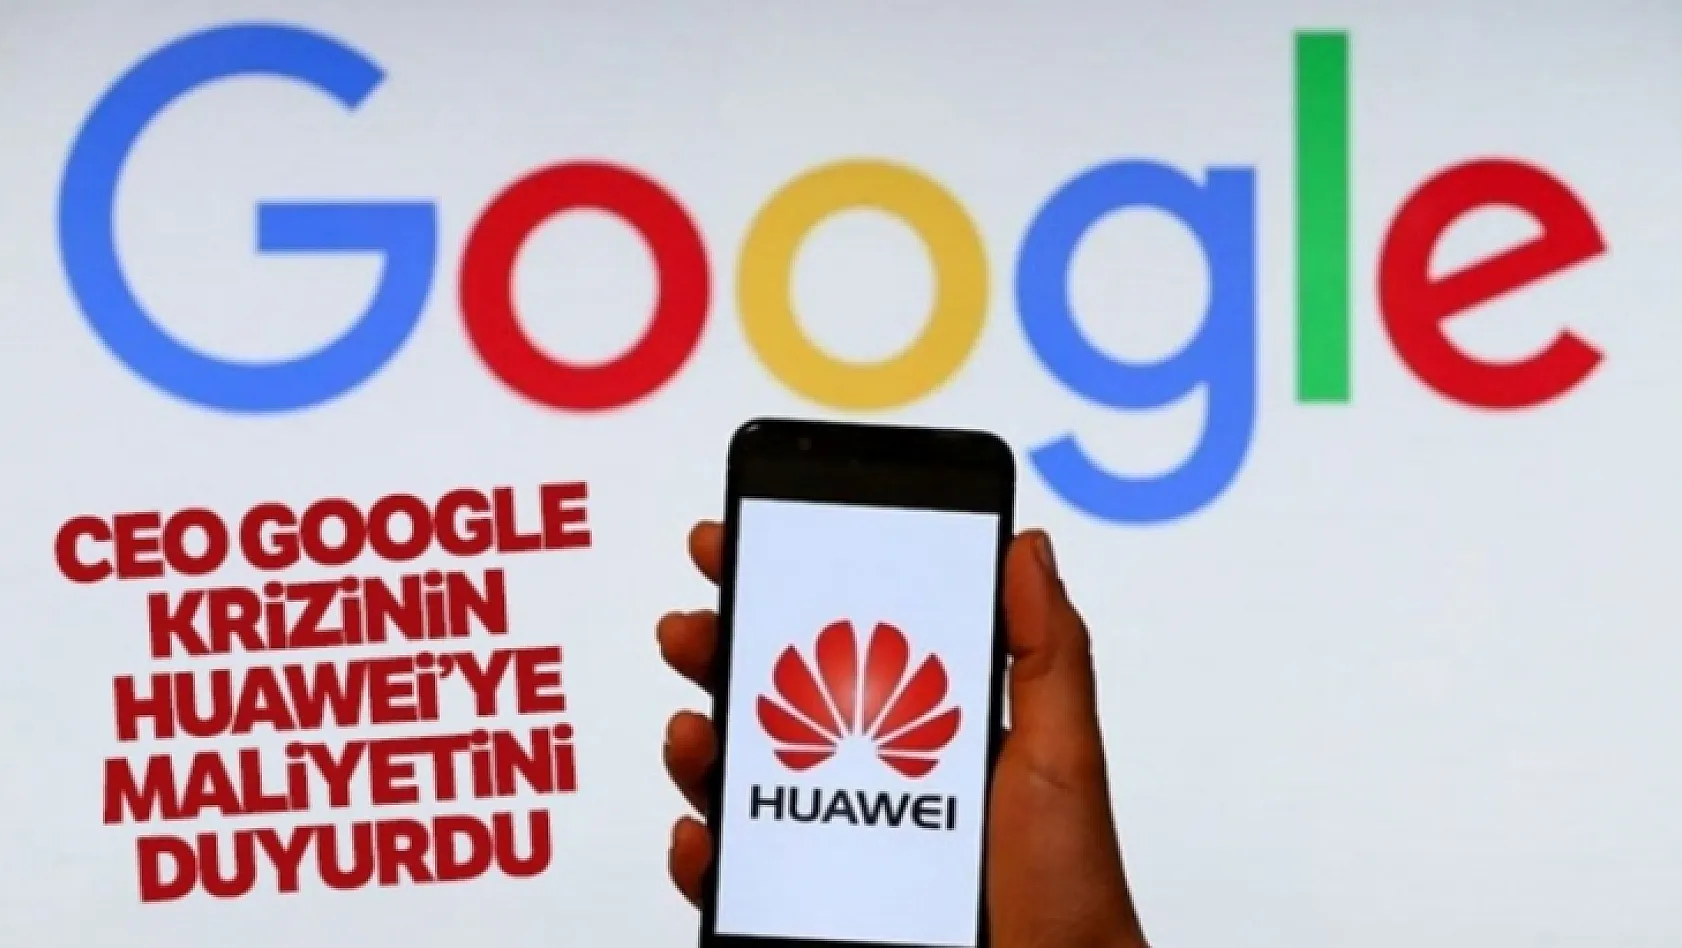 Google Krizinin Huawei'ye Maliyeti!